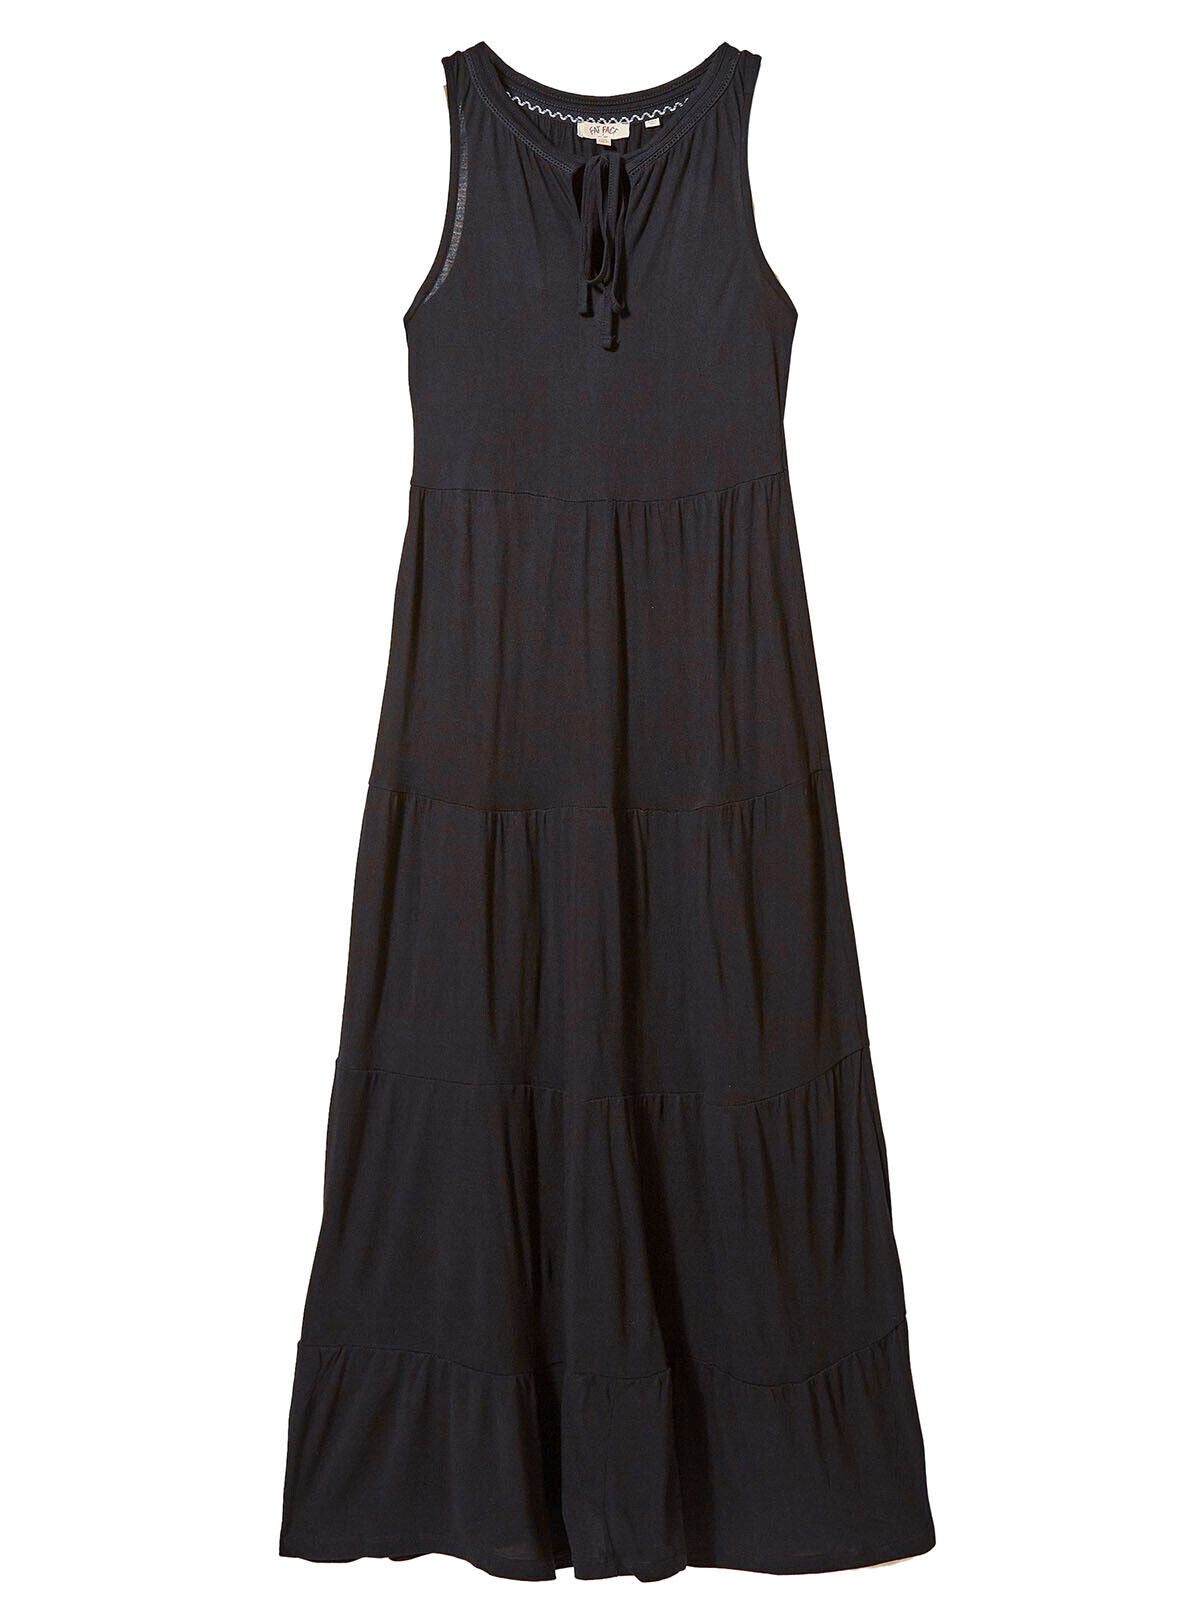 EX Fat Face Black Suri Jersey Maxi Dress in Sizes 10, 12, 14, 16 RRP £49.50